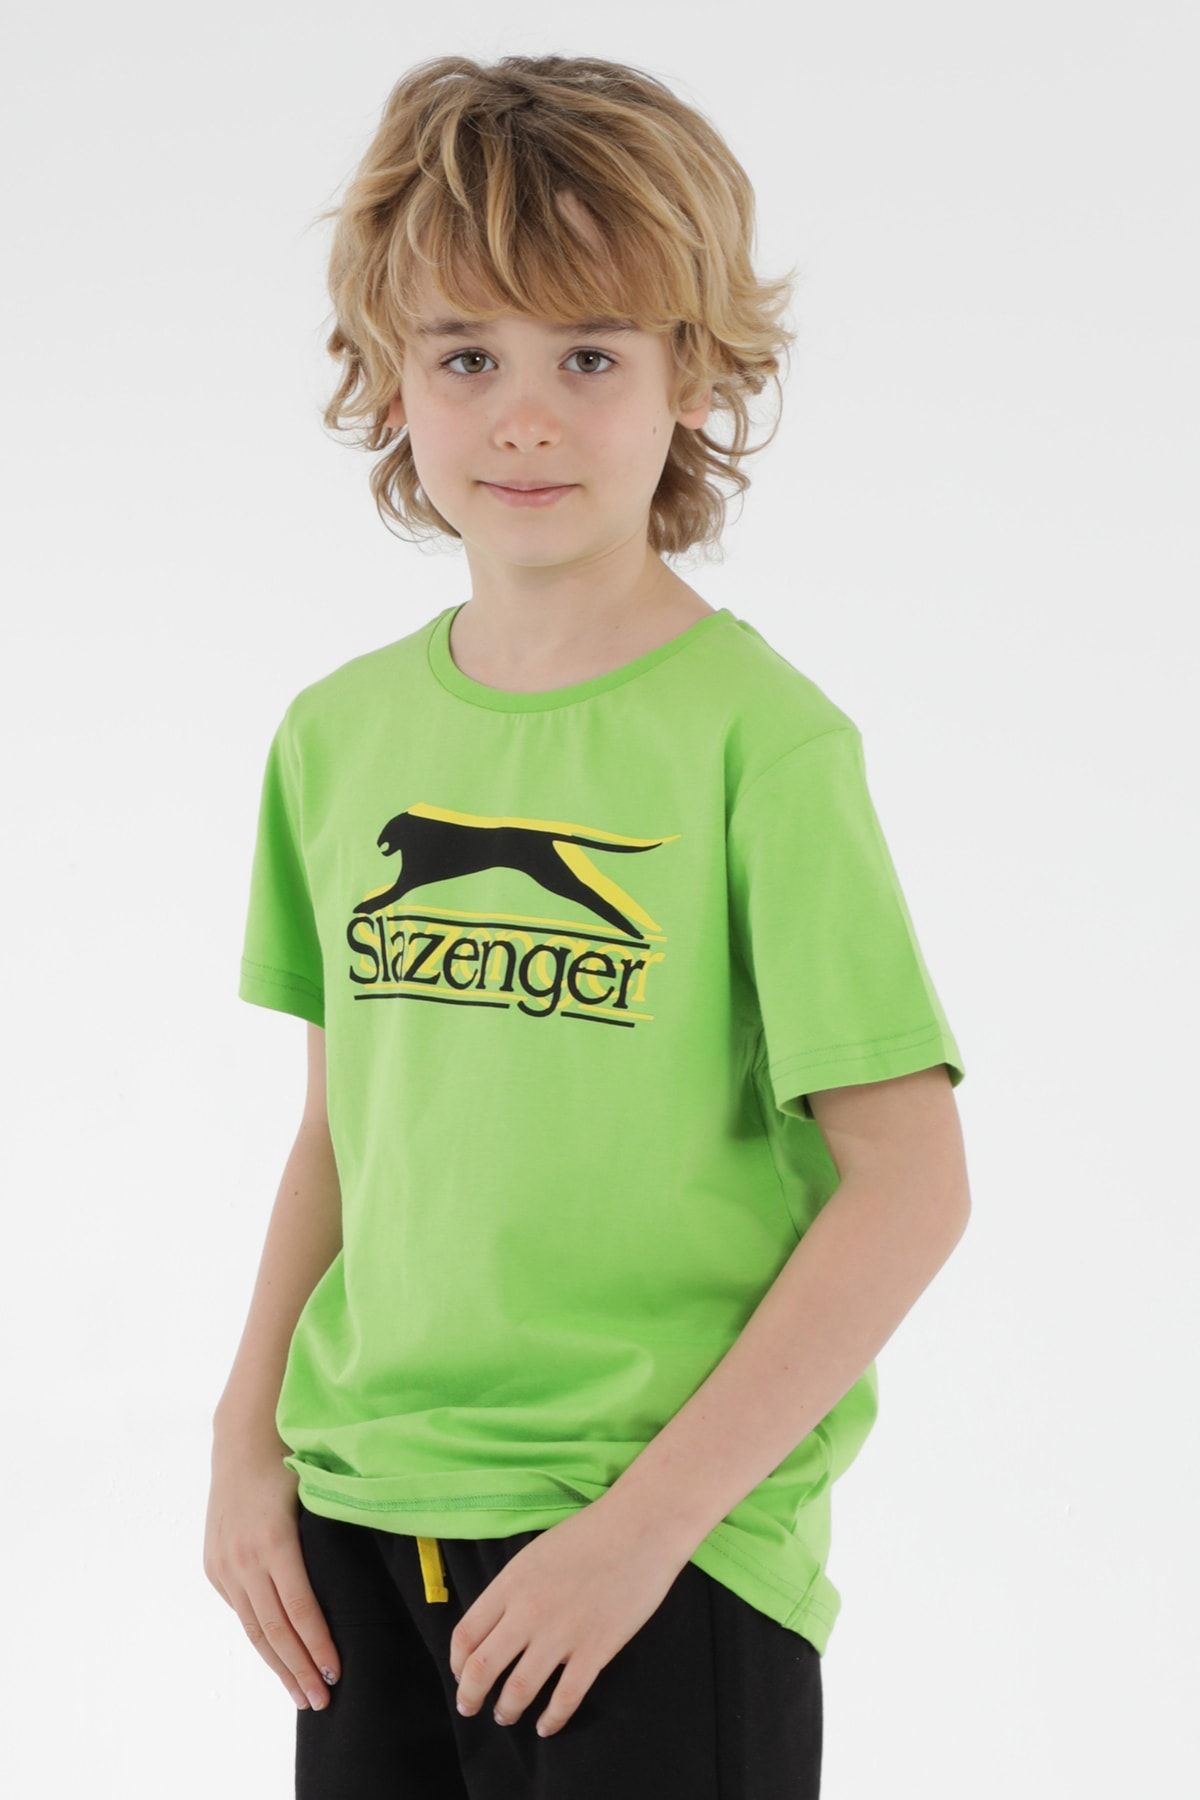 Slazenger Palle Erkek Çocuk T-shirt Yeşil